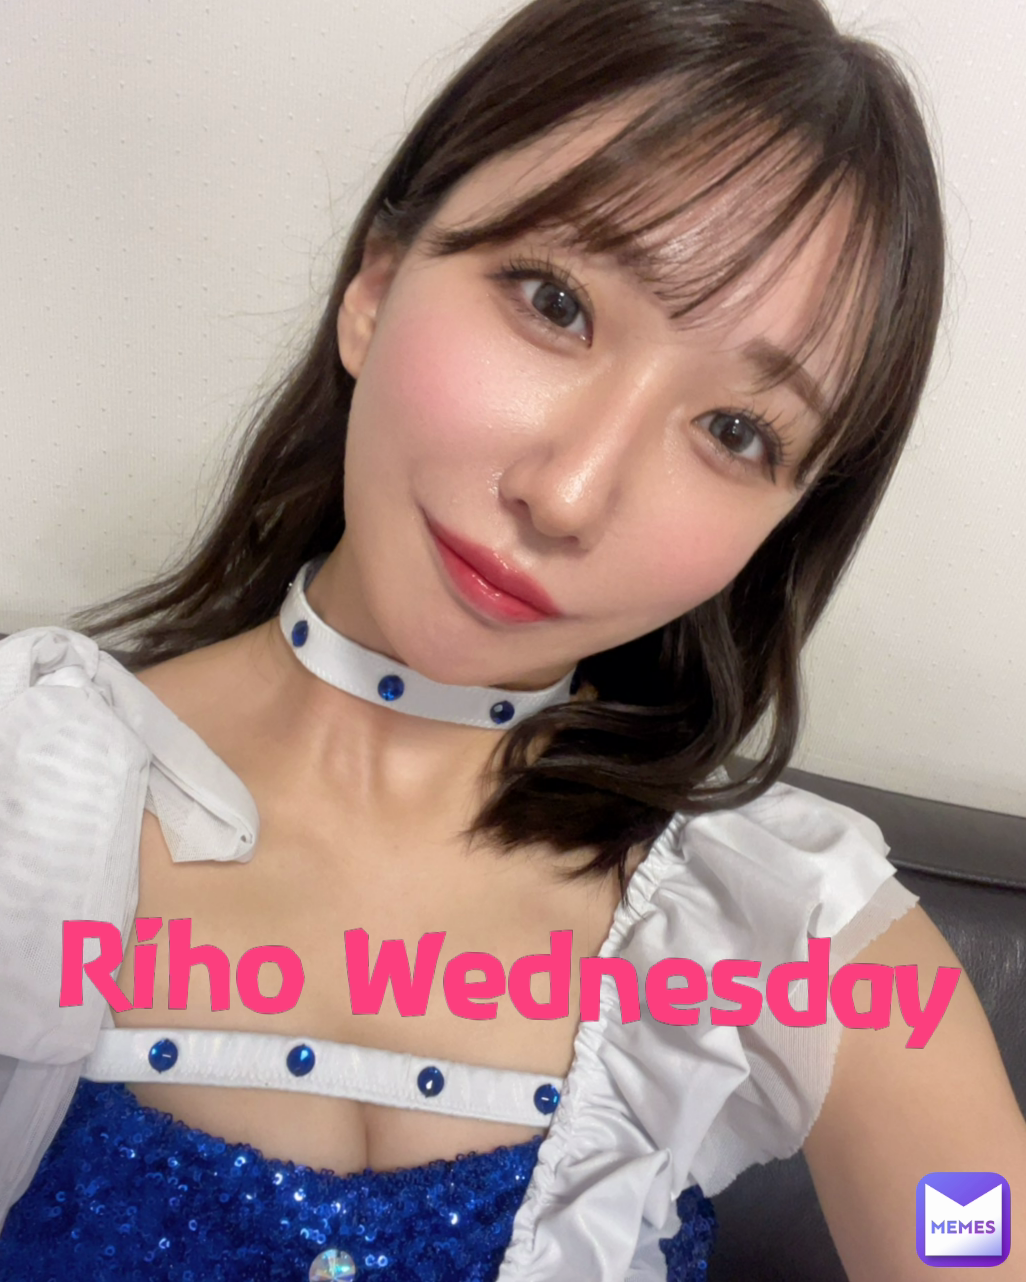 Riho Wednesday